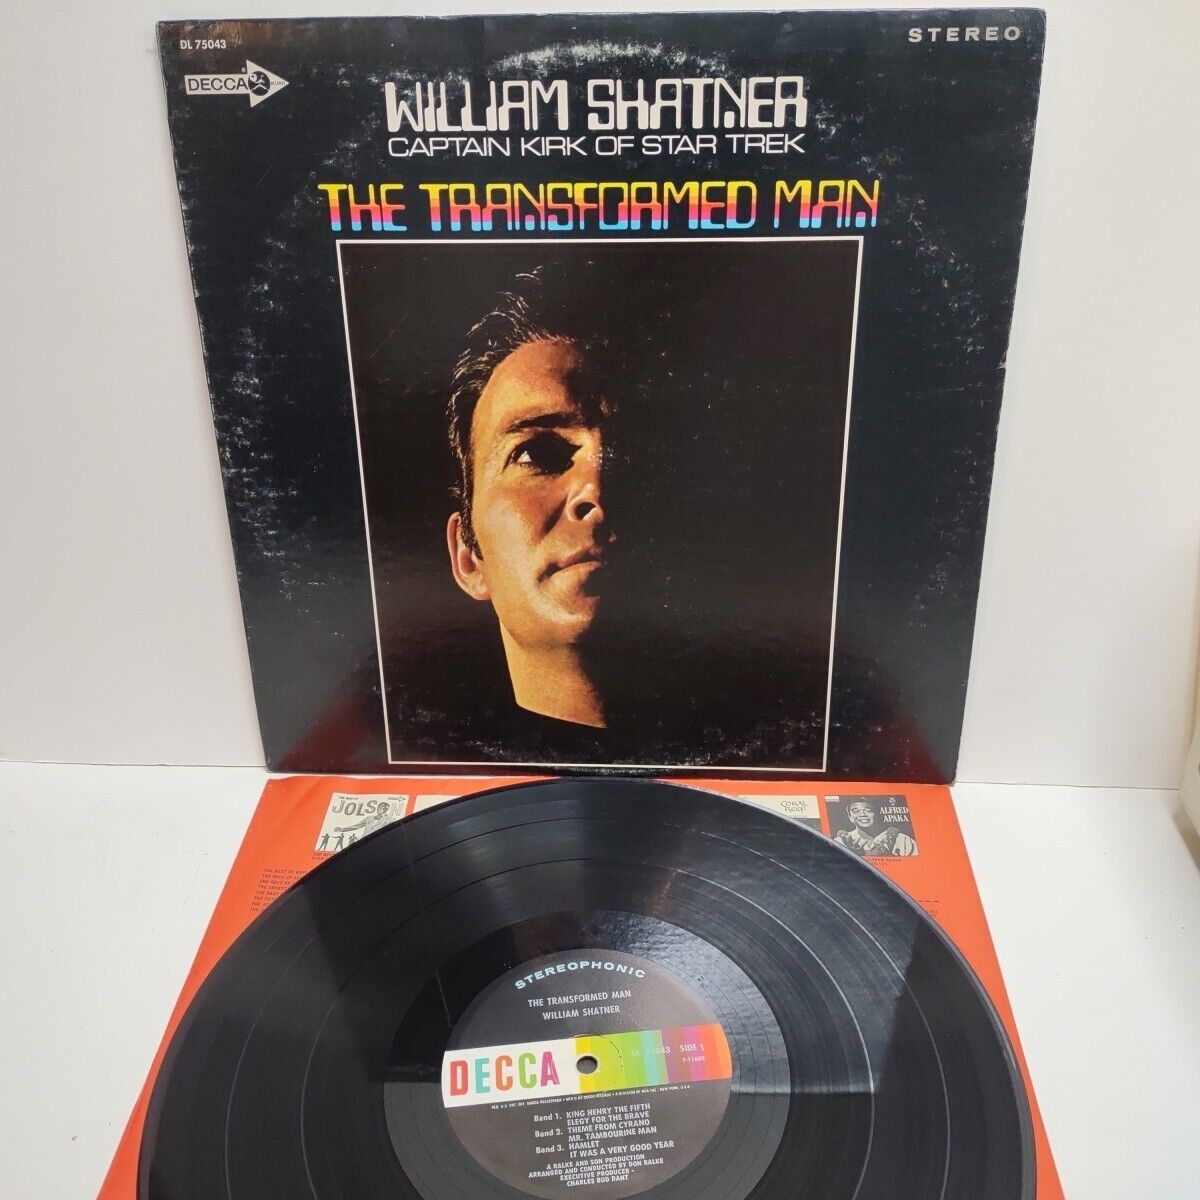 William Shatner The Transformed Man 1968 Vinyl LP Stereo Decca 75043 Spoken Word